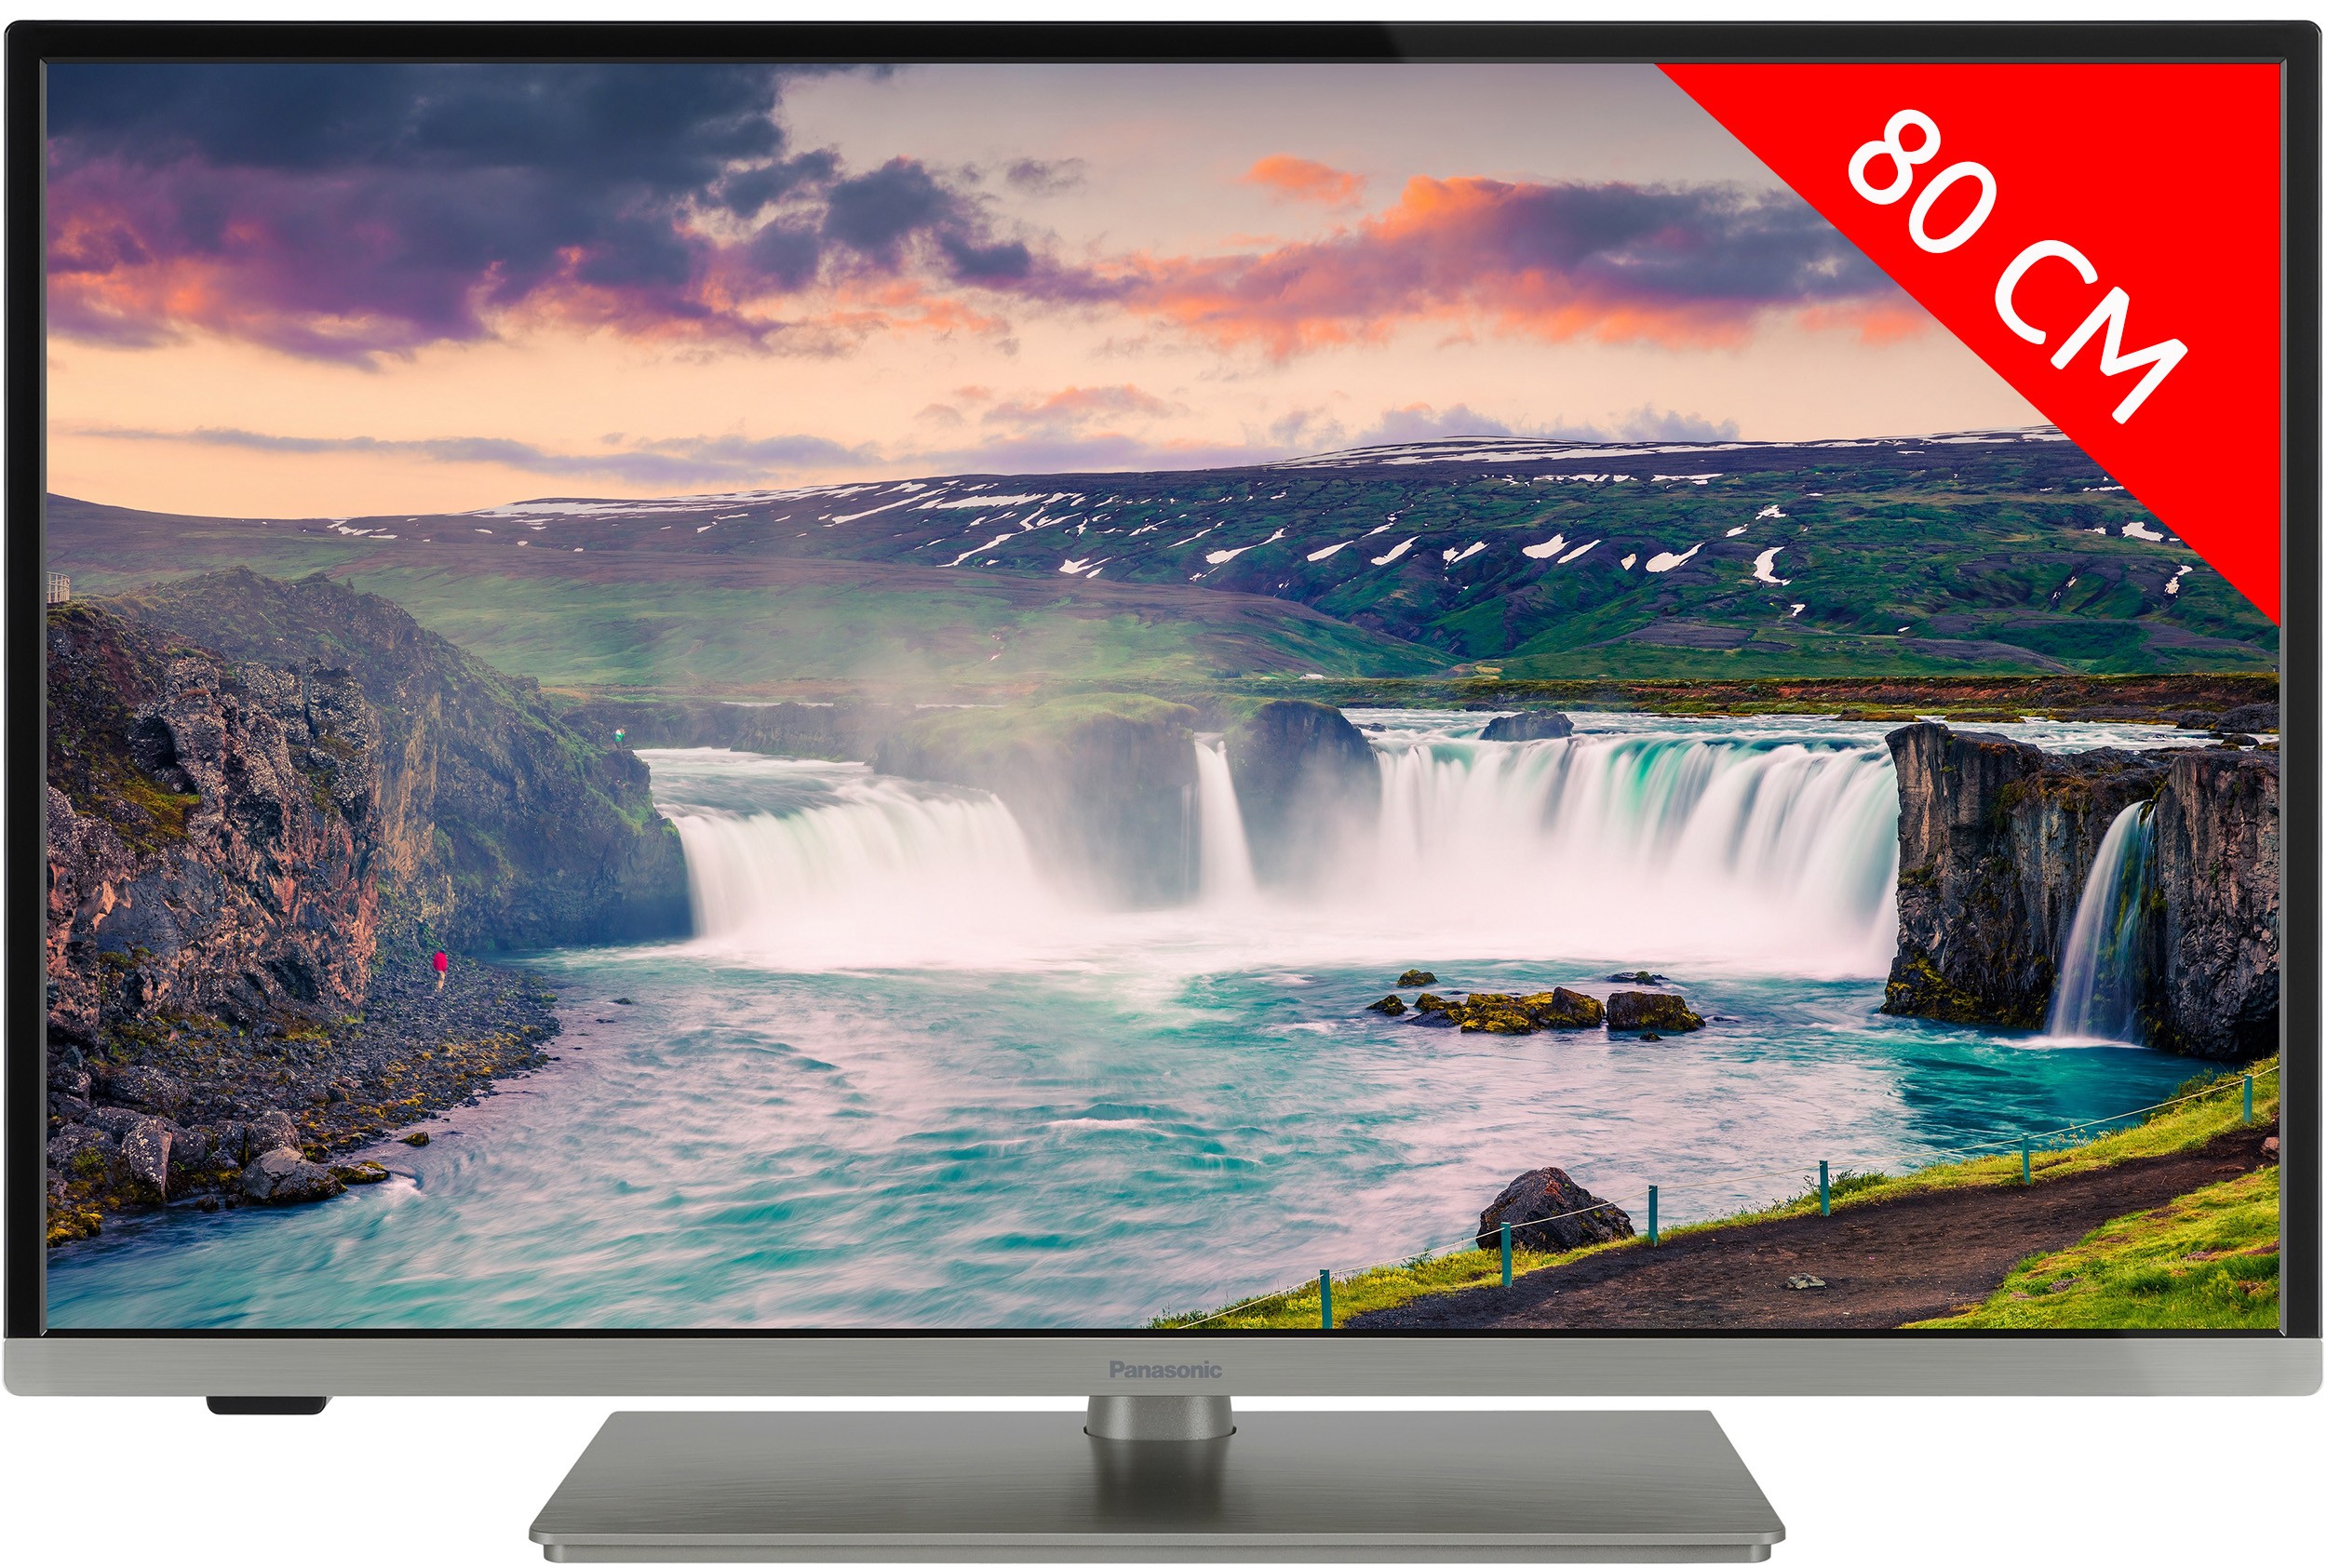 PANASONIC TV LCD 81 cm   TX-32MS350E